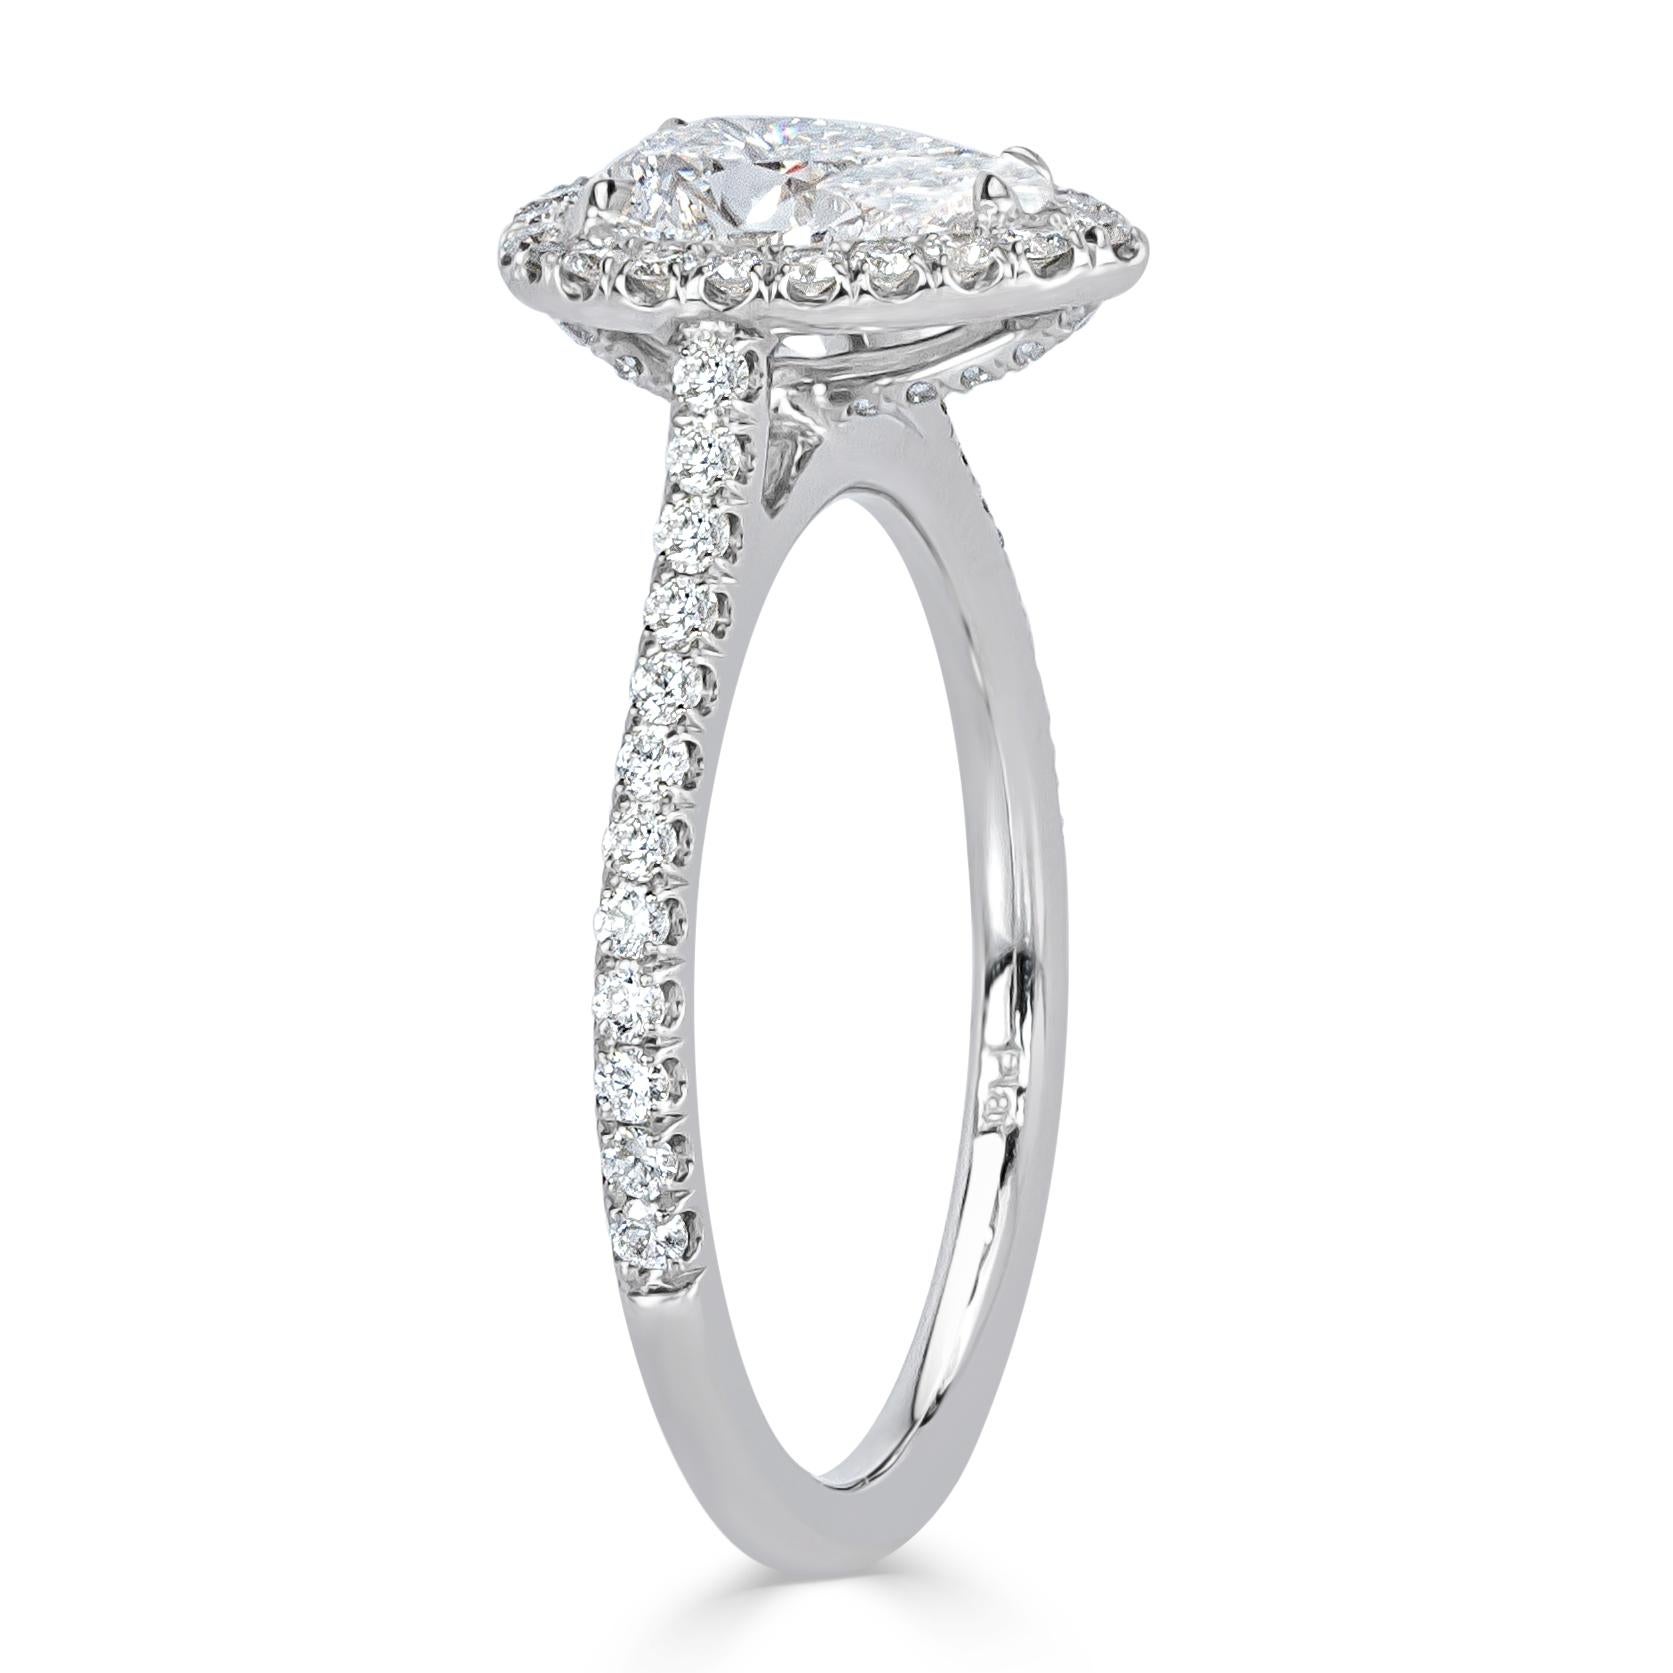 Women's or Men's Mark Broumand 1.61 Carat Pear Shaped Diamond Engagement Ring